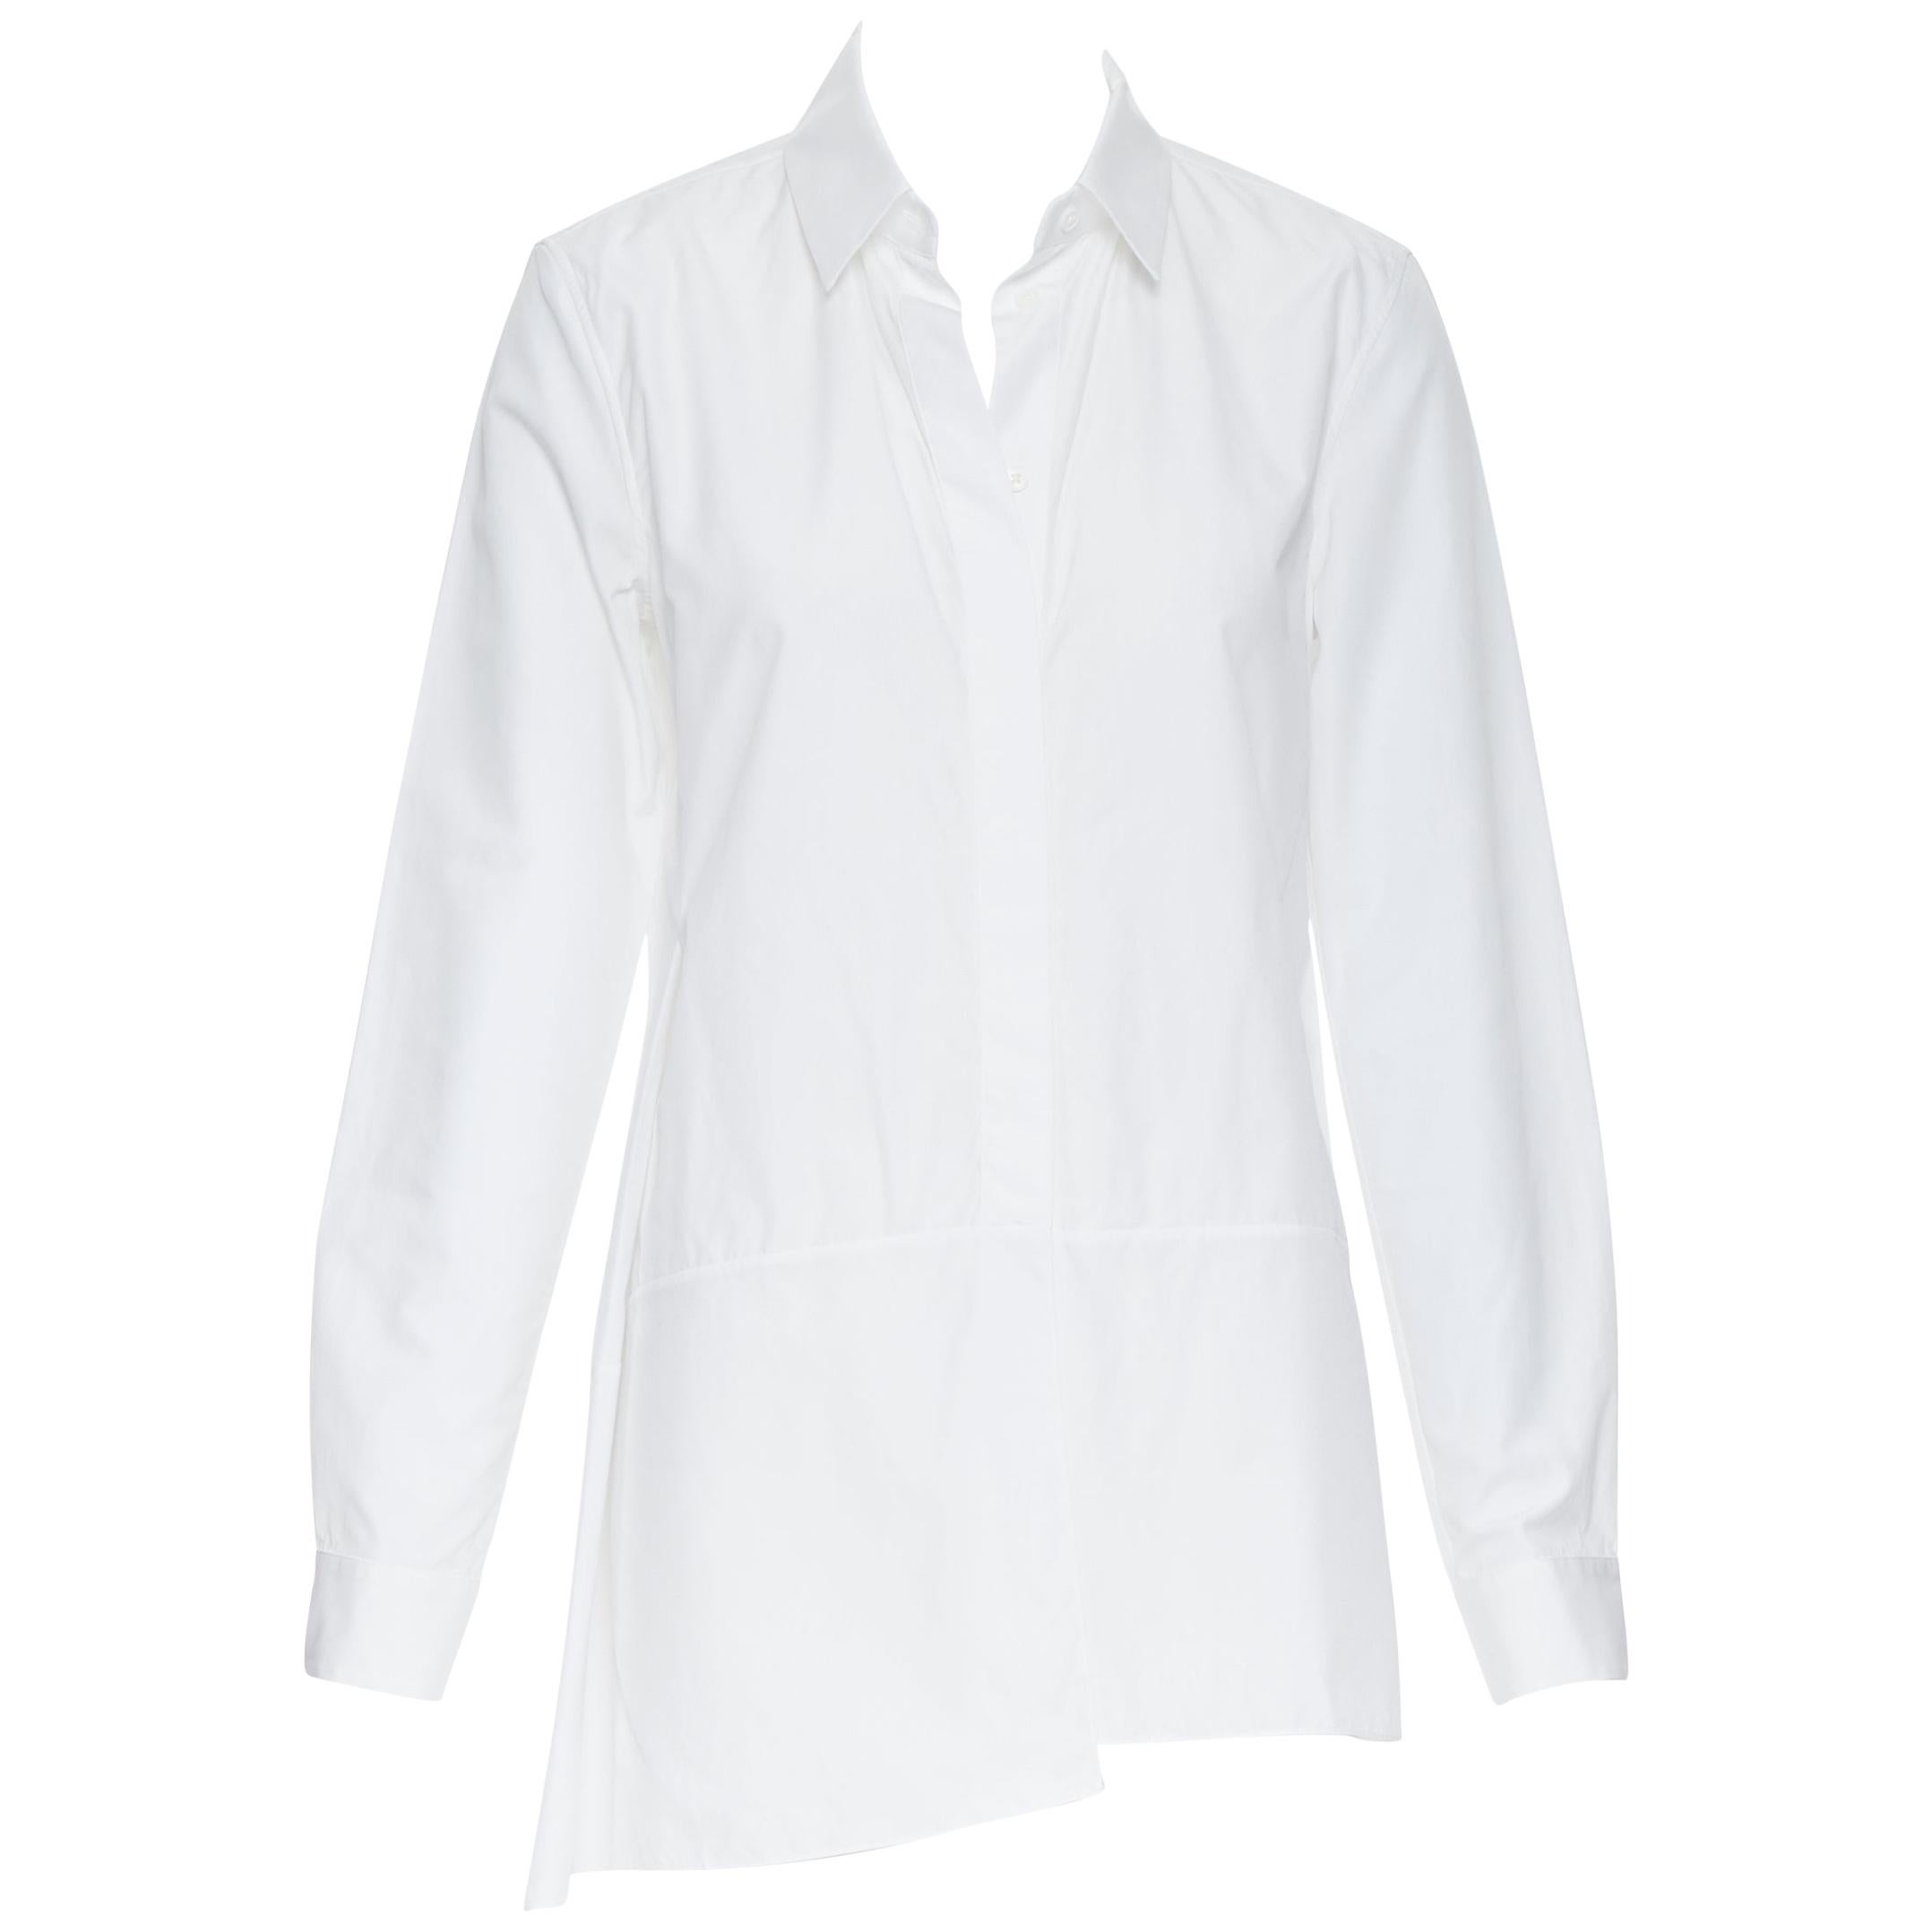 JIL SANDER white cotton minimalist high low panel insert button up shirt FR32